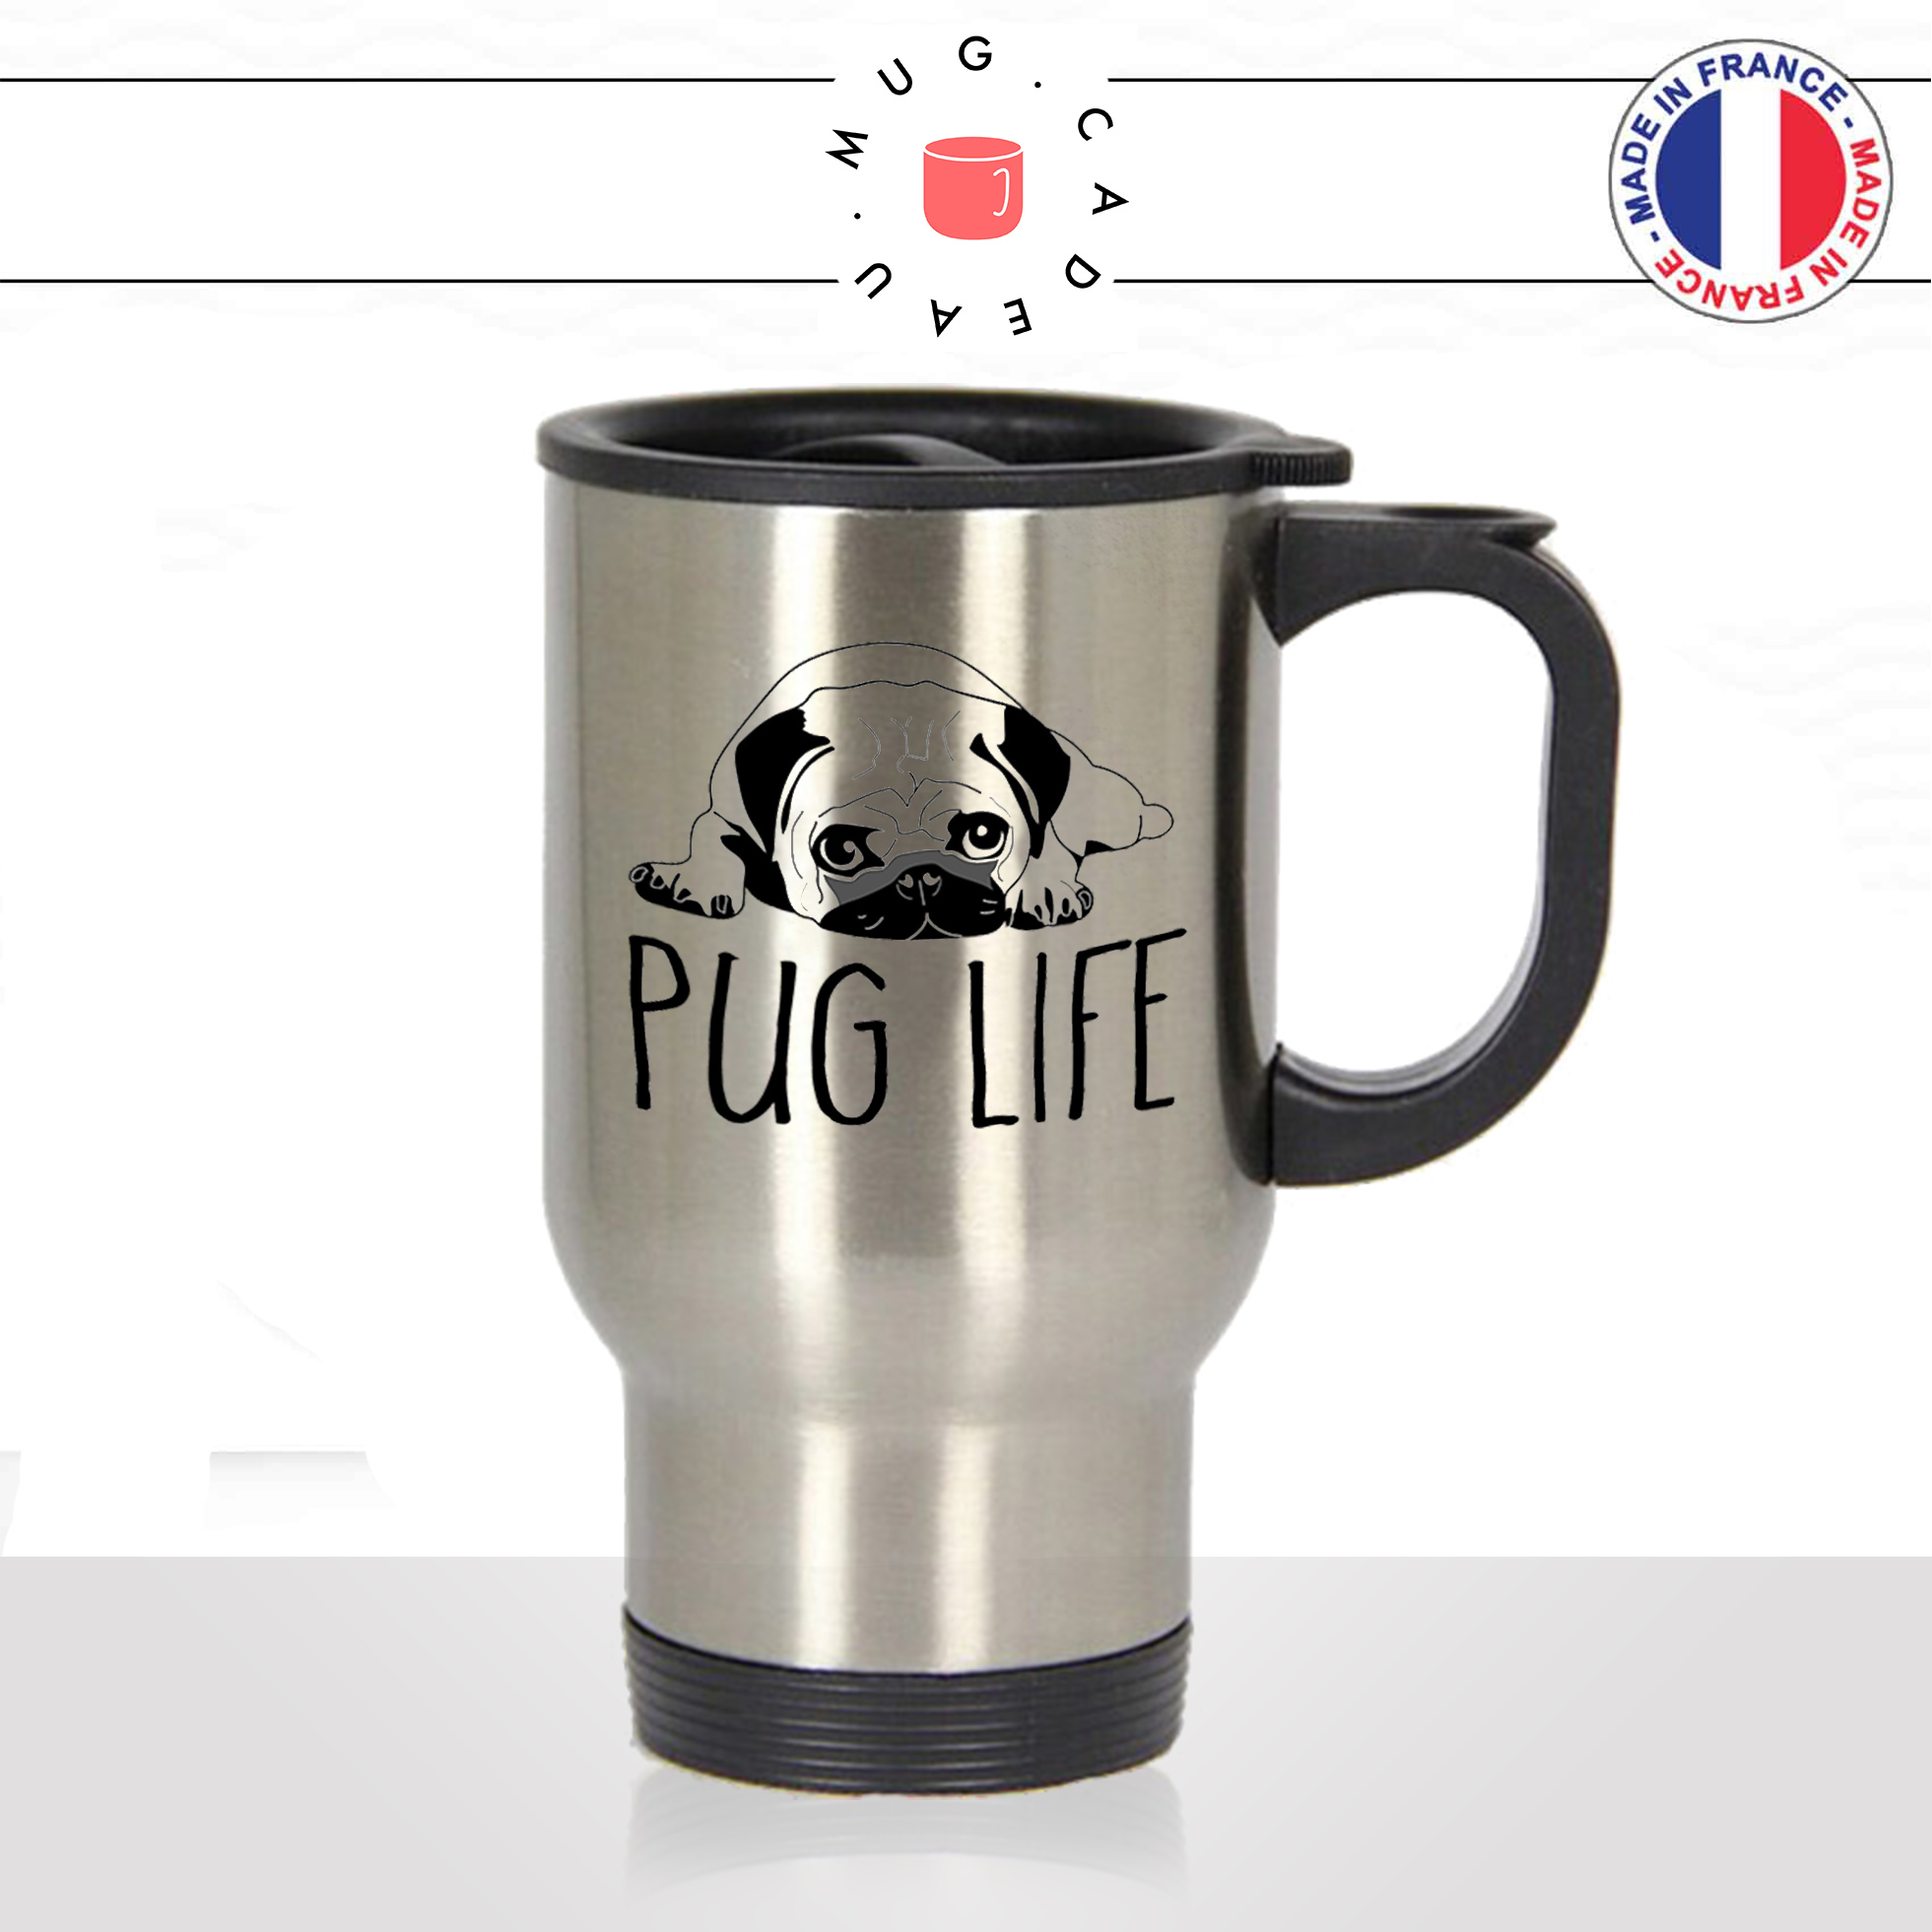 mug-tasse-thermos-voyage-chien-chiot-pug-life-thug-life-humour-animal-de-compagnie-anglais-bulledog-francais-pittbull-idée-cadeau-original2